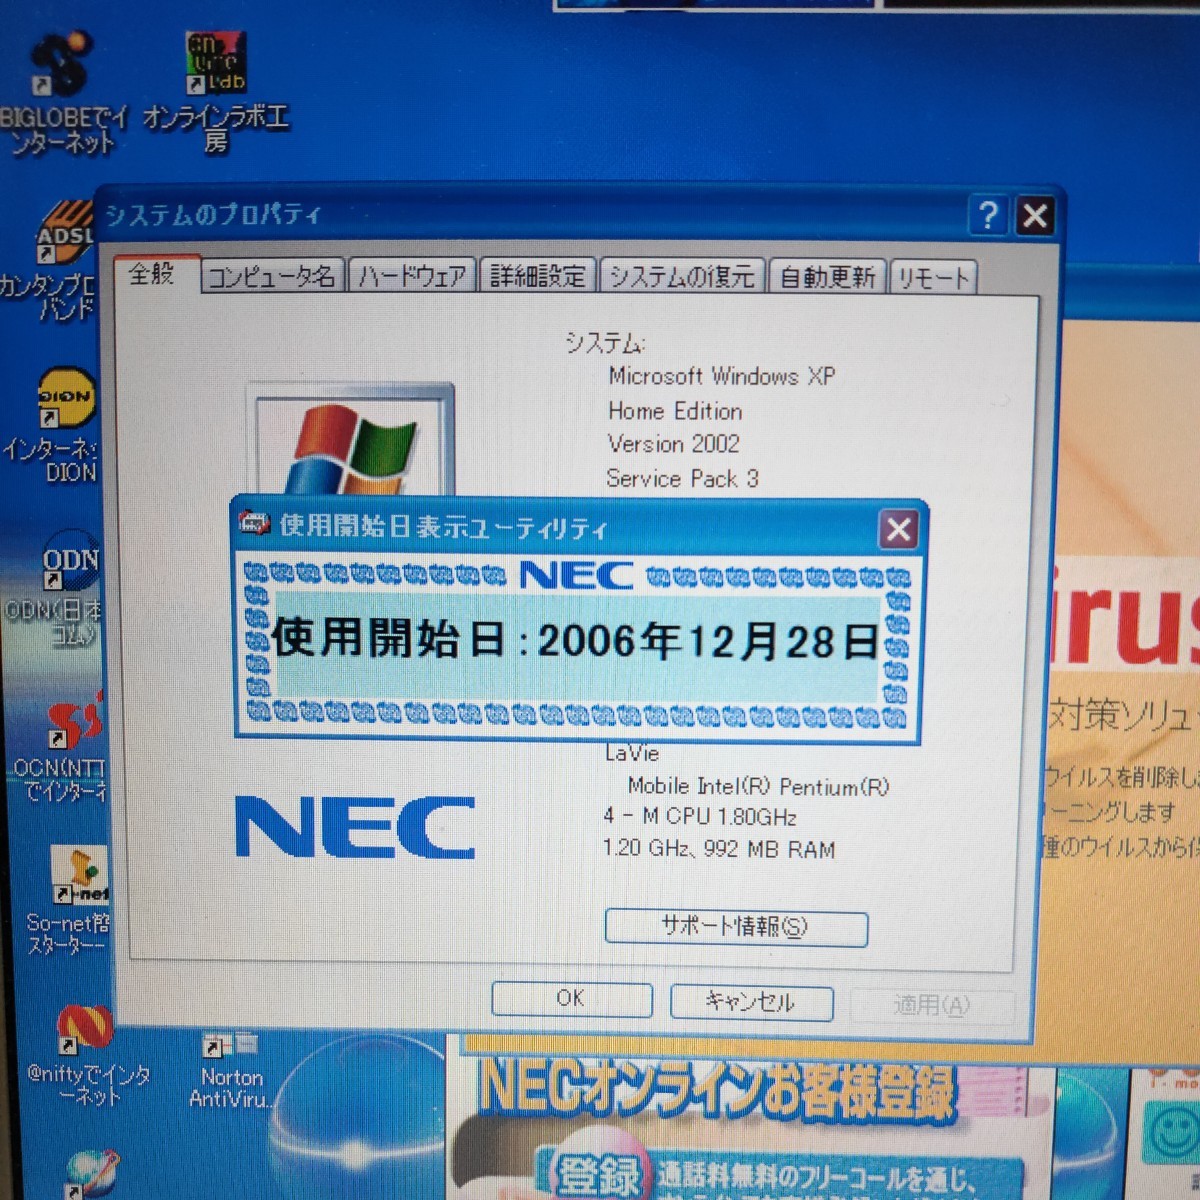 NEC LaVie PC-LL7305D WindowsXP SP3 リカバリ済 Pentium4-M 1.8Ghz換装済 1GB 40GB 元箱 付属品あり DVD CD PCカード RS232C ATI FDDの画像2